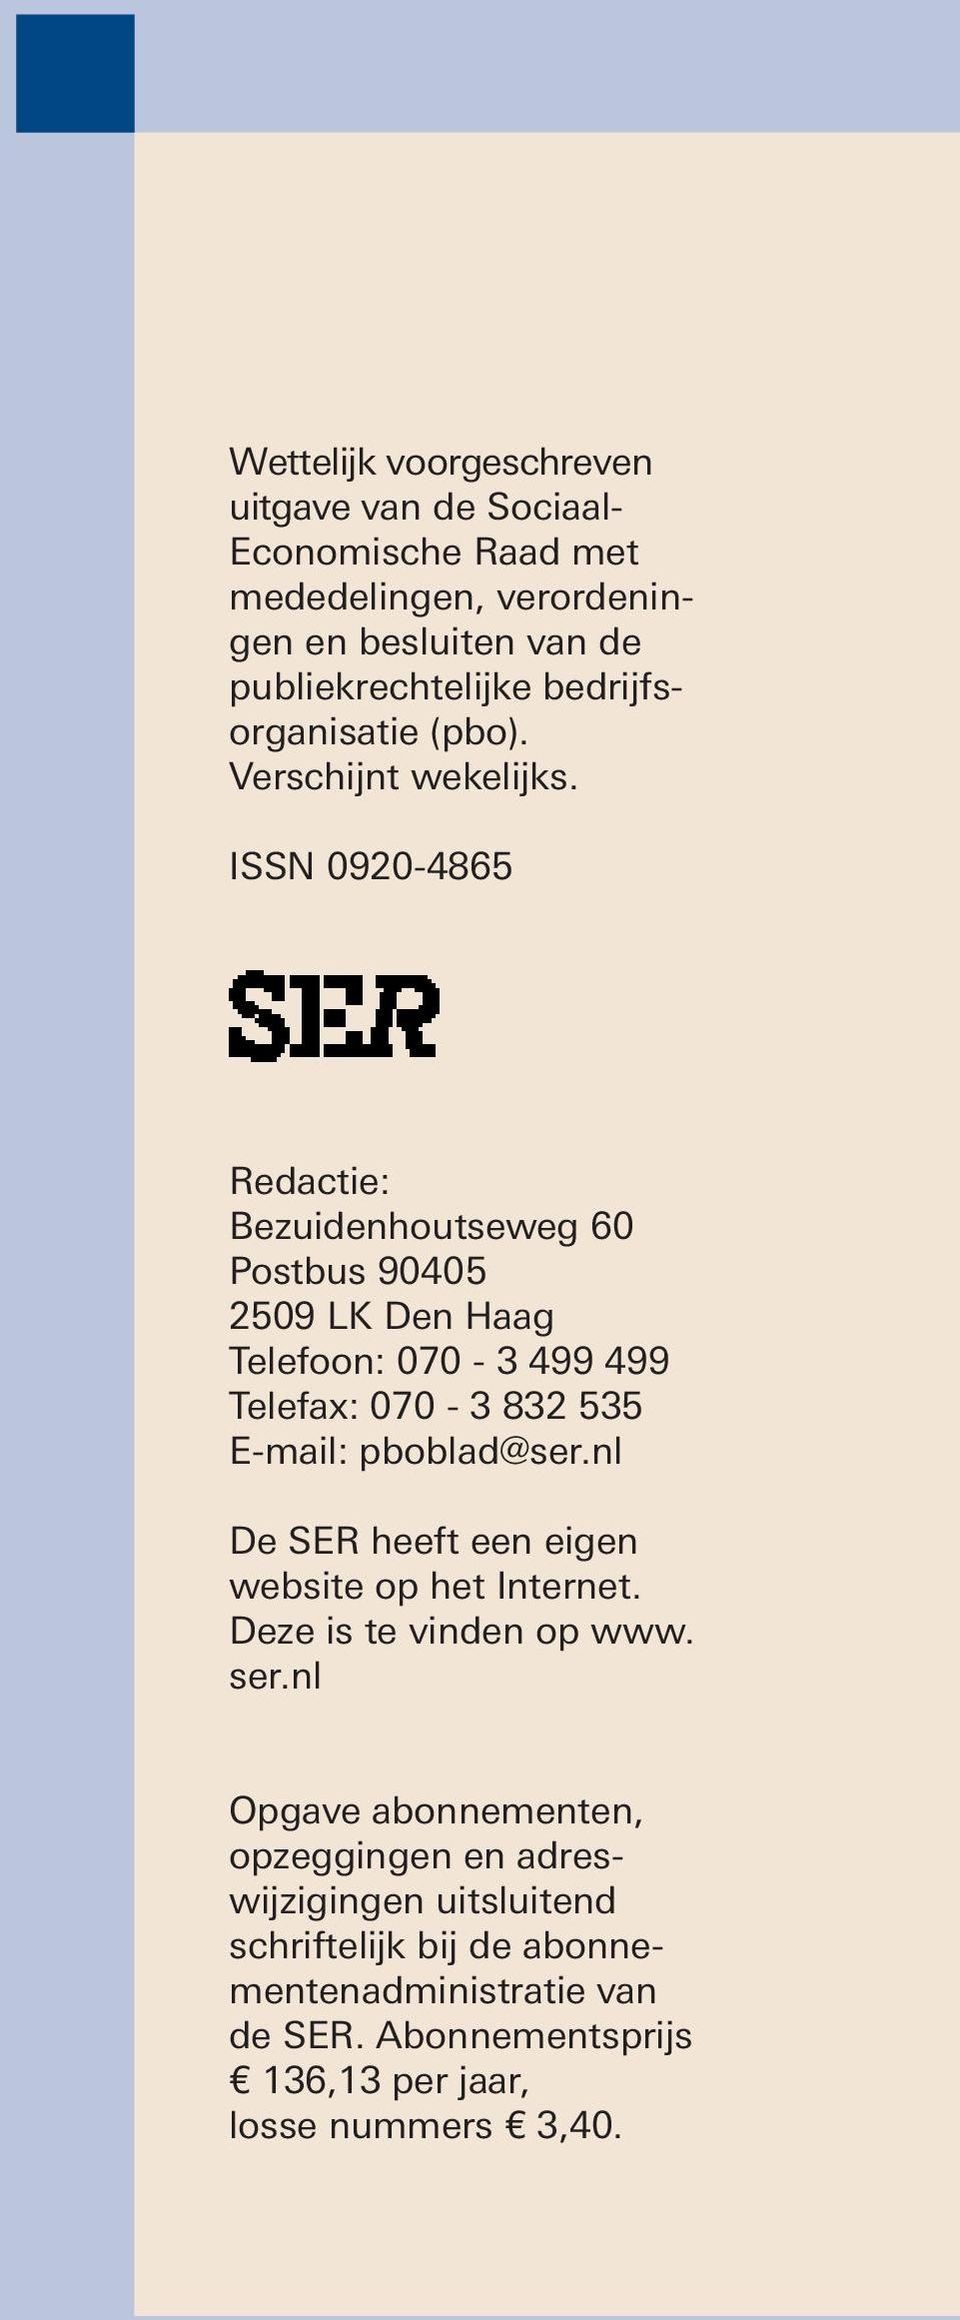 ISSN 0920-4865 Redactie: Bezuidenhoutseweg 60 Postbus 90405 2509 LK Den Haag Telefoon: 070-3 499 499 Telefax: 070-3 832 535 E-mail: pboblad@ser.